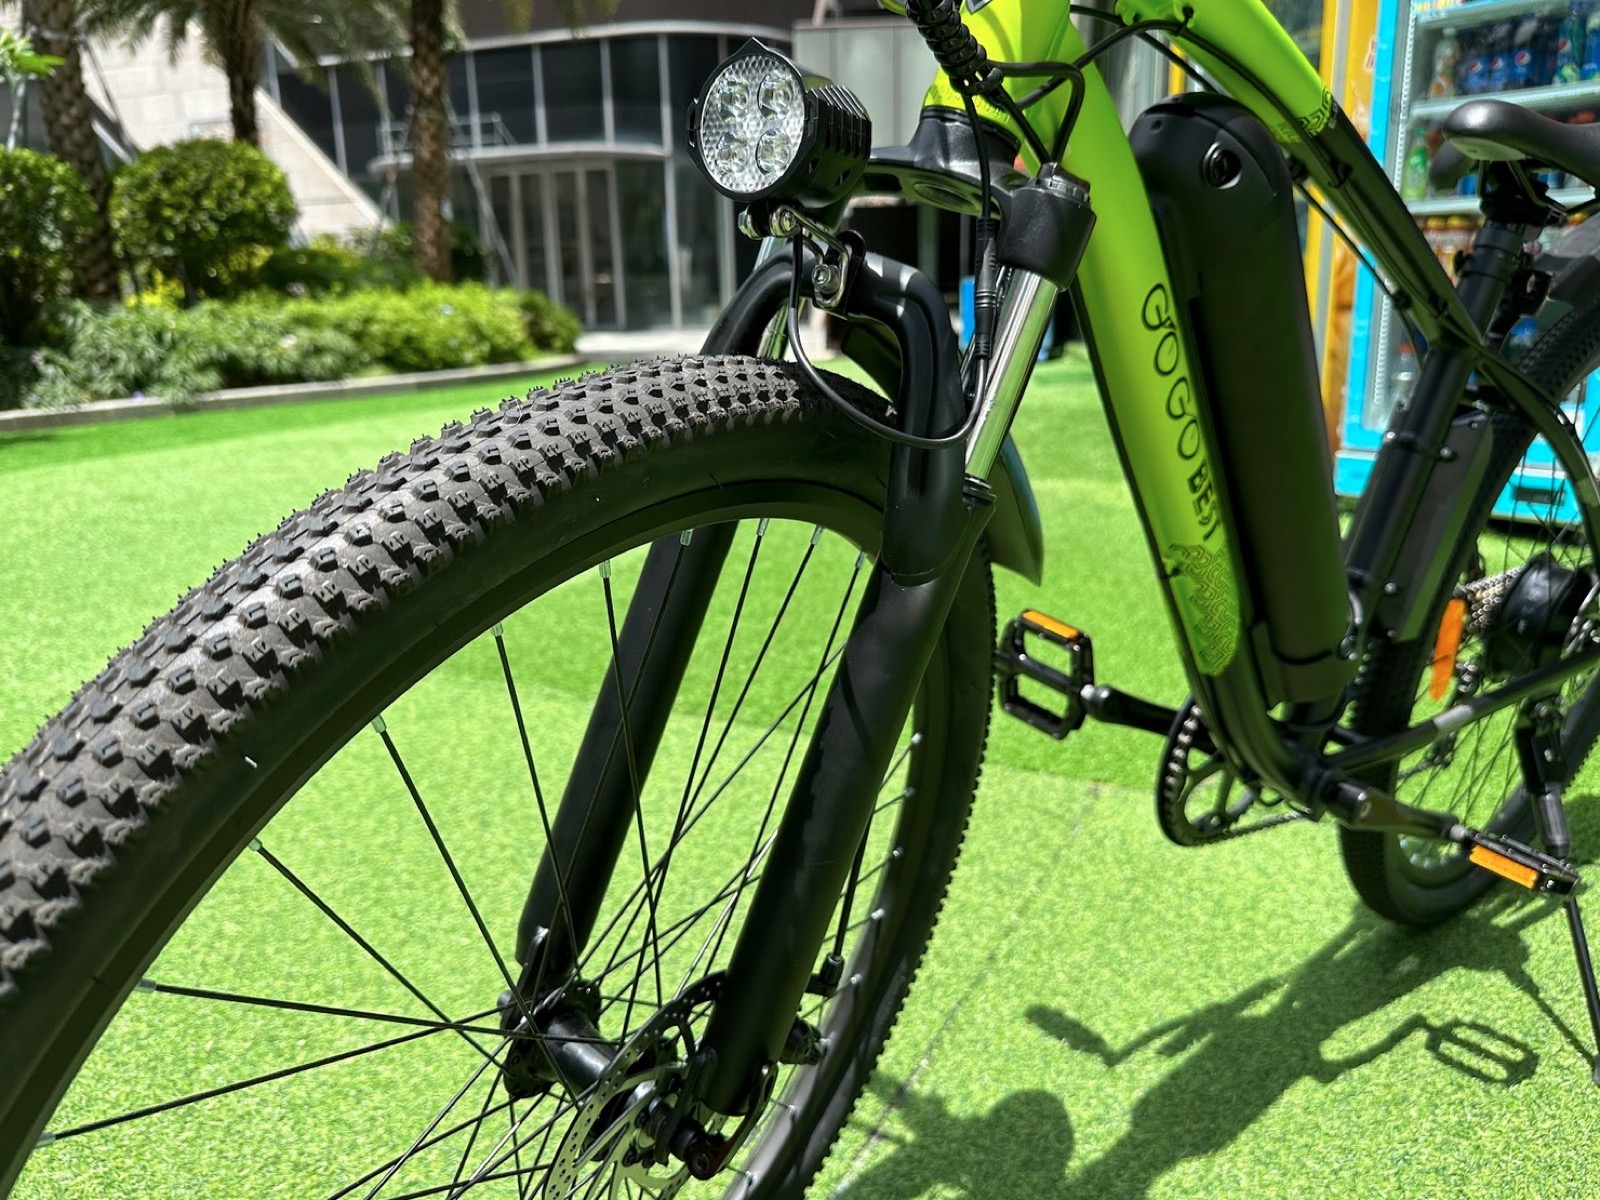 GOGOBEST GM30, la mountain bike elettrica scontata di 600 €